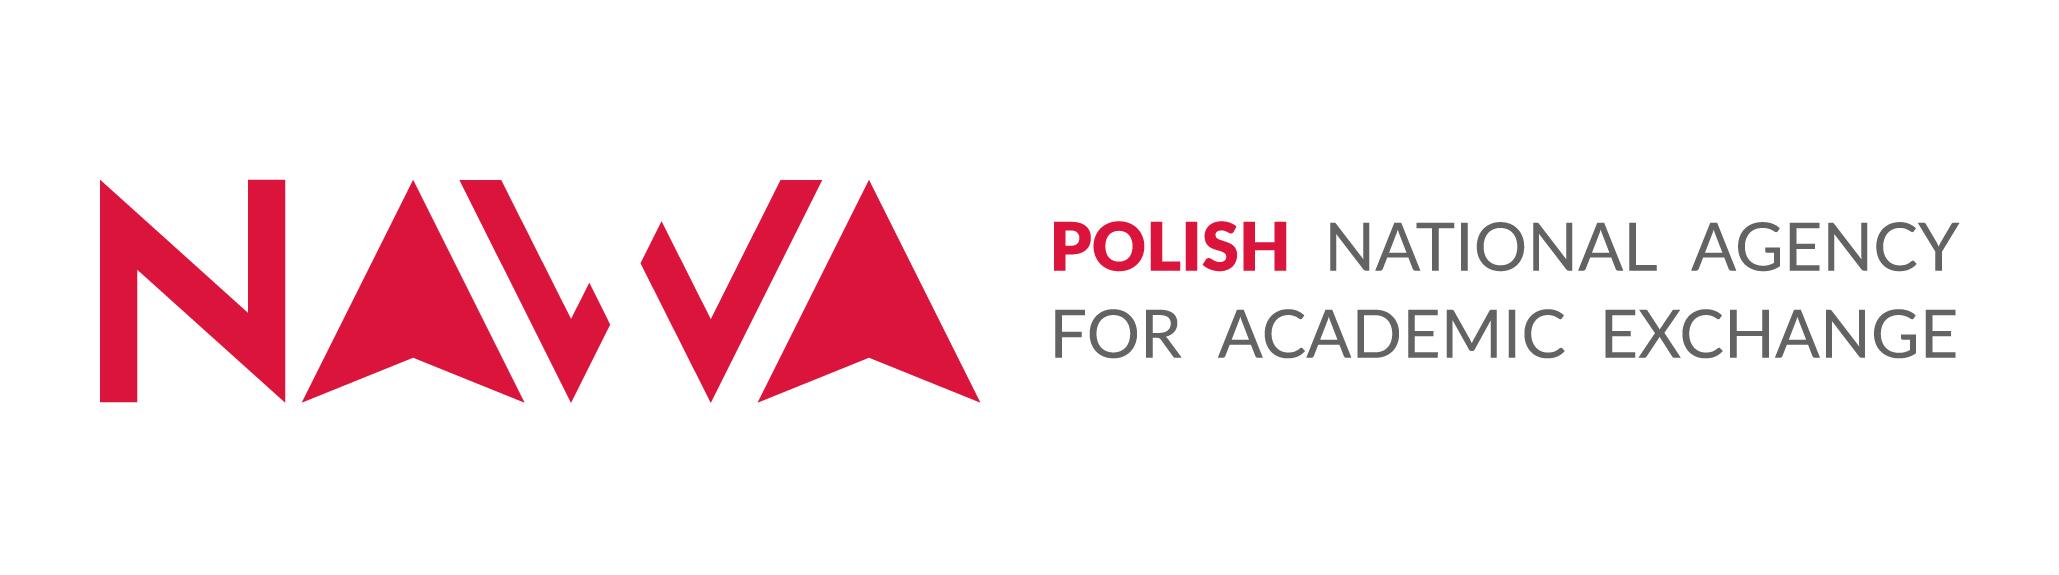 Polish National Agency for Academic Exchange, logo